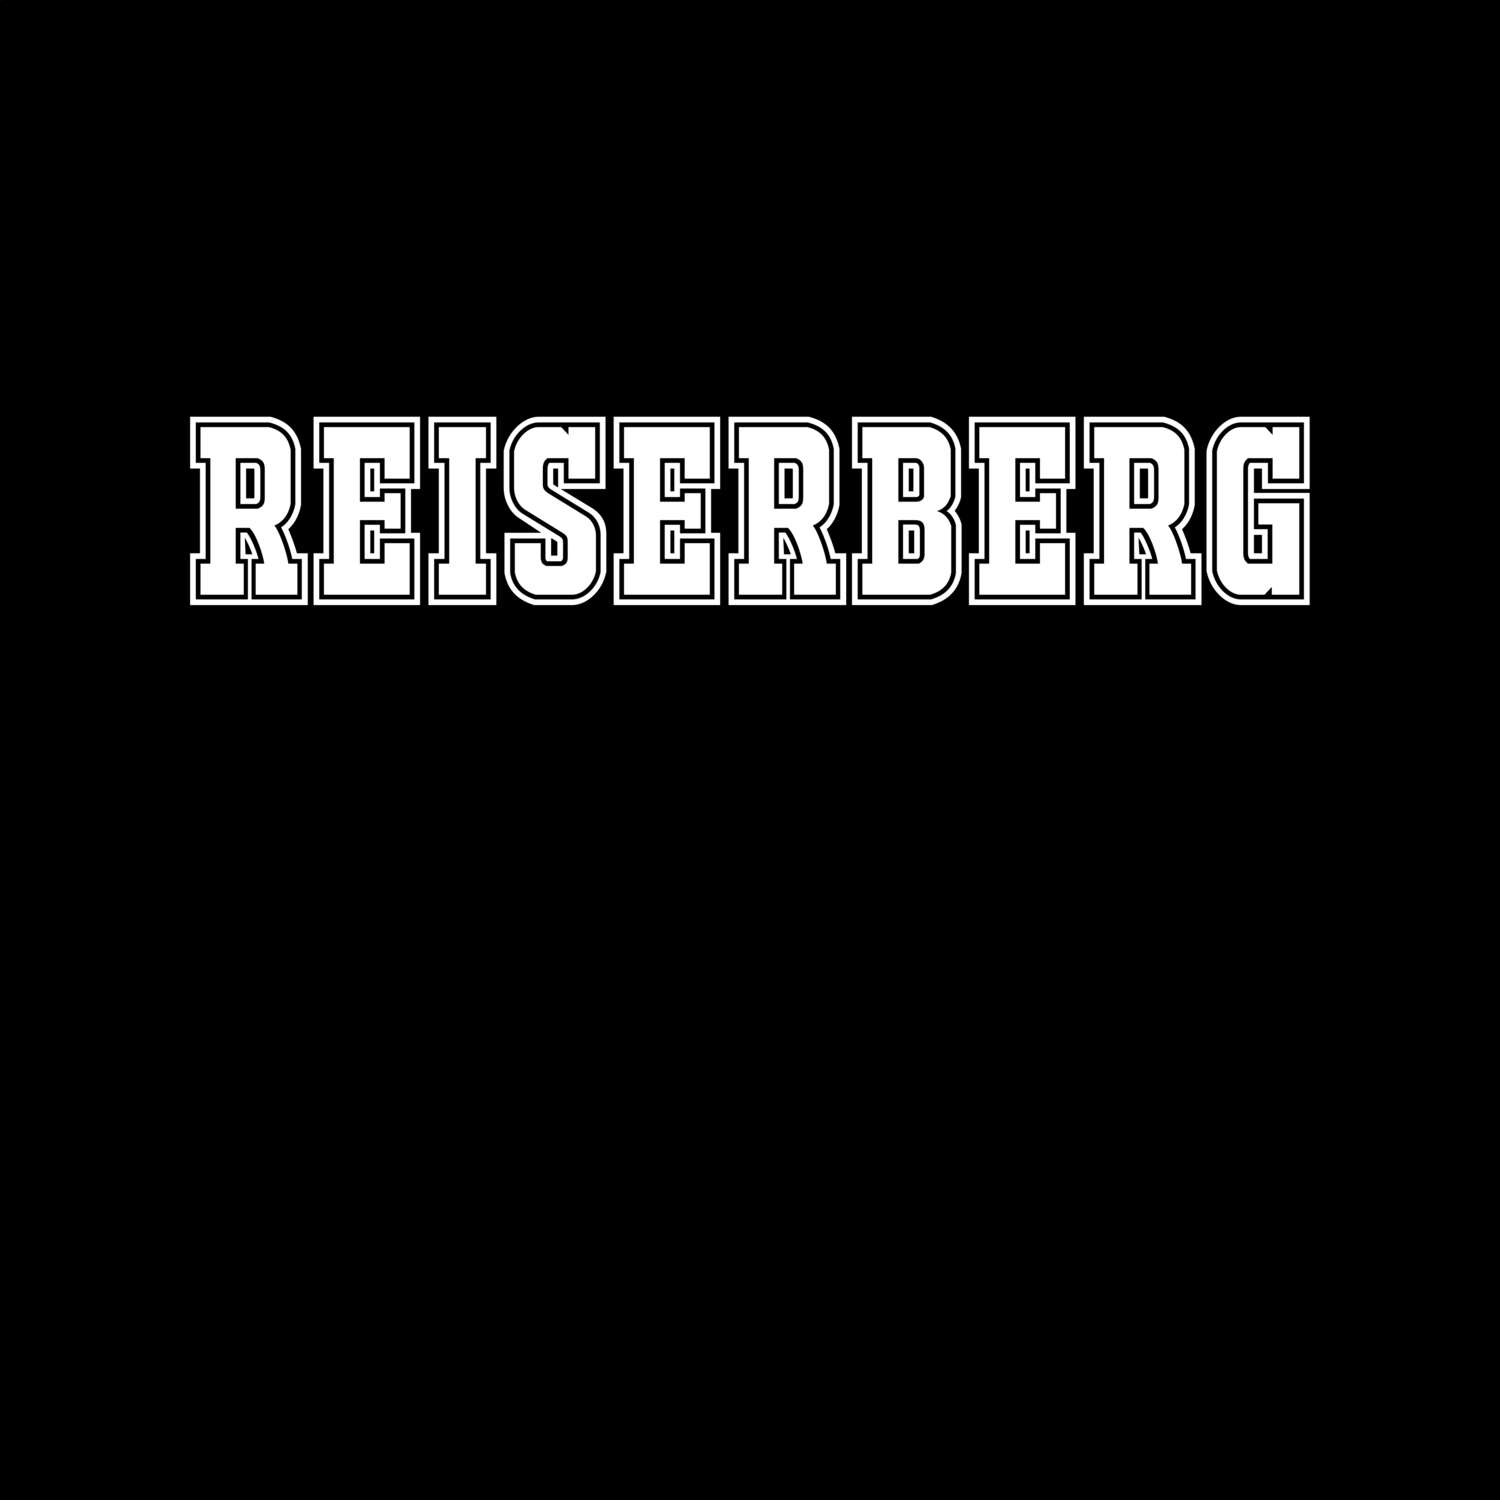 Reiserberg T-Shirt »Classic«